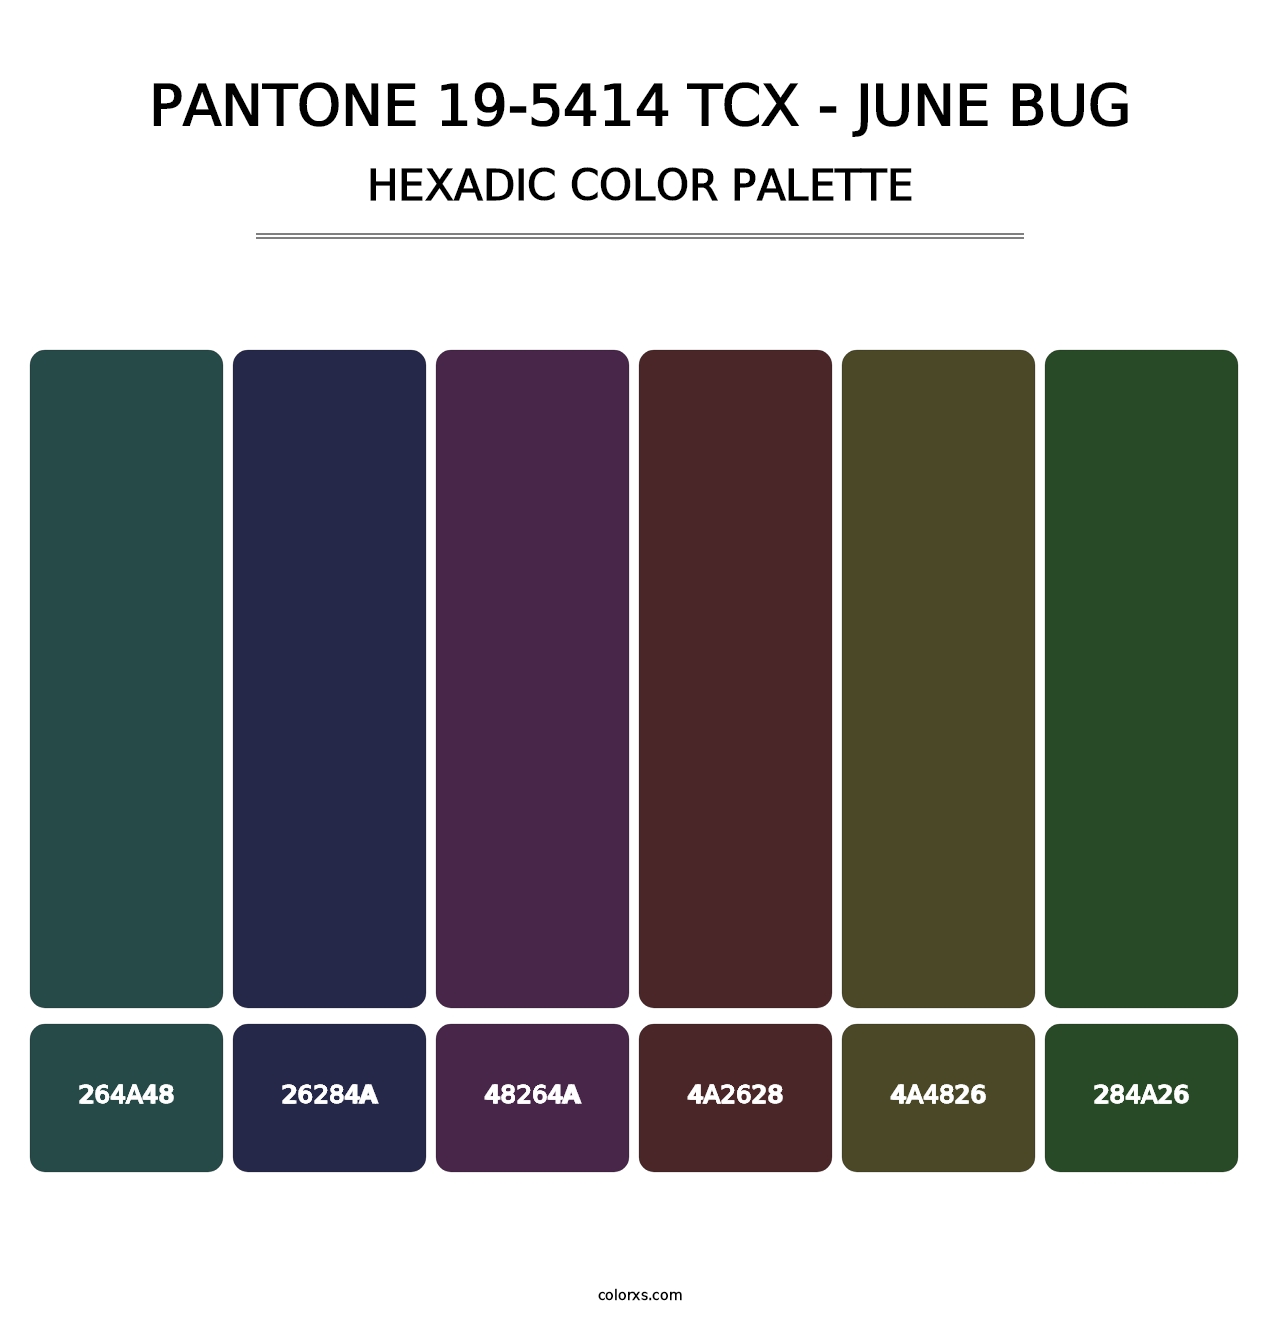 PANTONE 19-5414 TCX - June Bug - Hexadic Color Palette